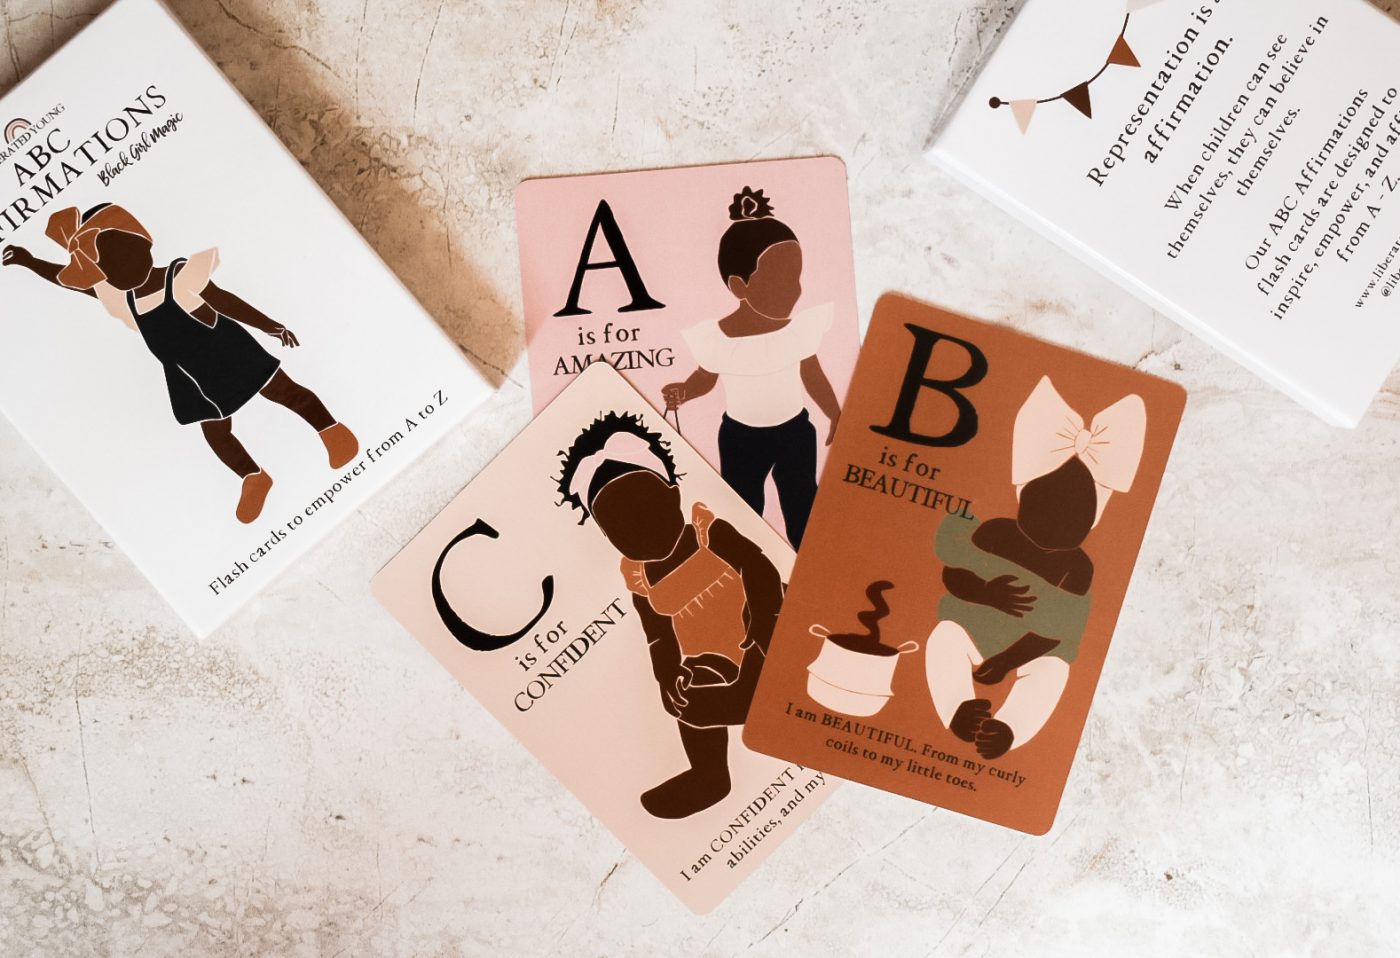 Black Girl Magic - ABC Affirmation Flash Cards